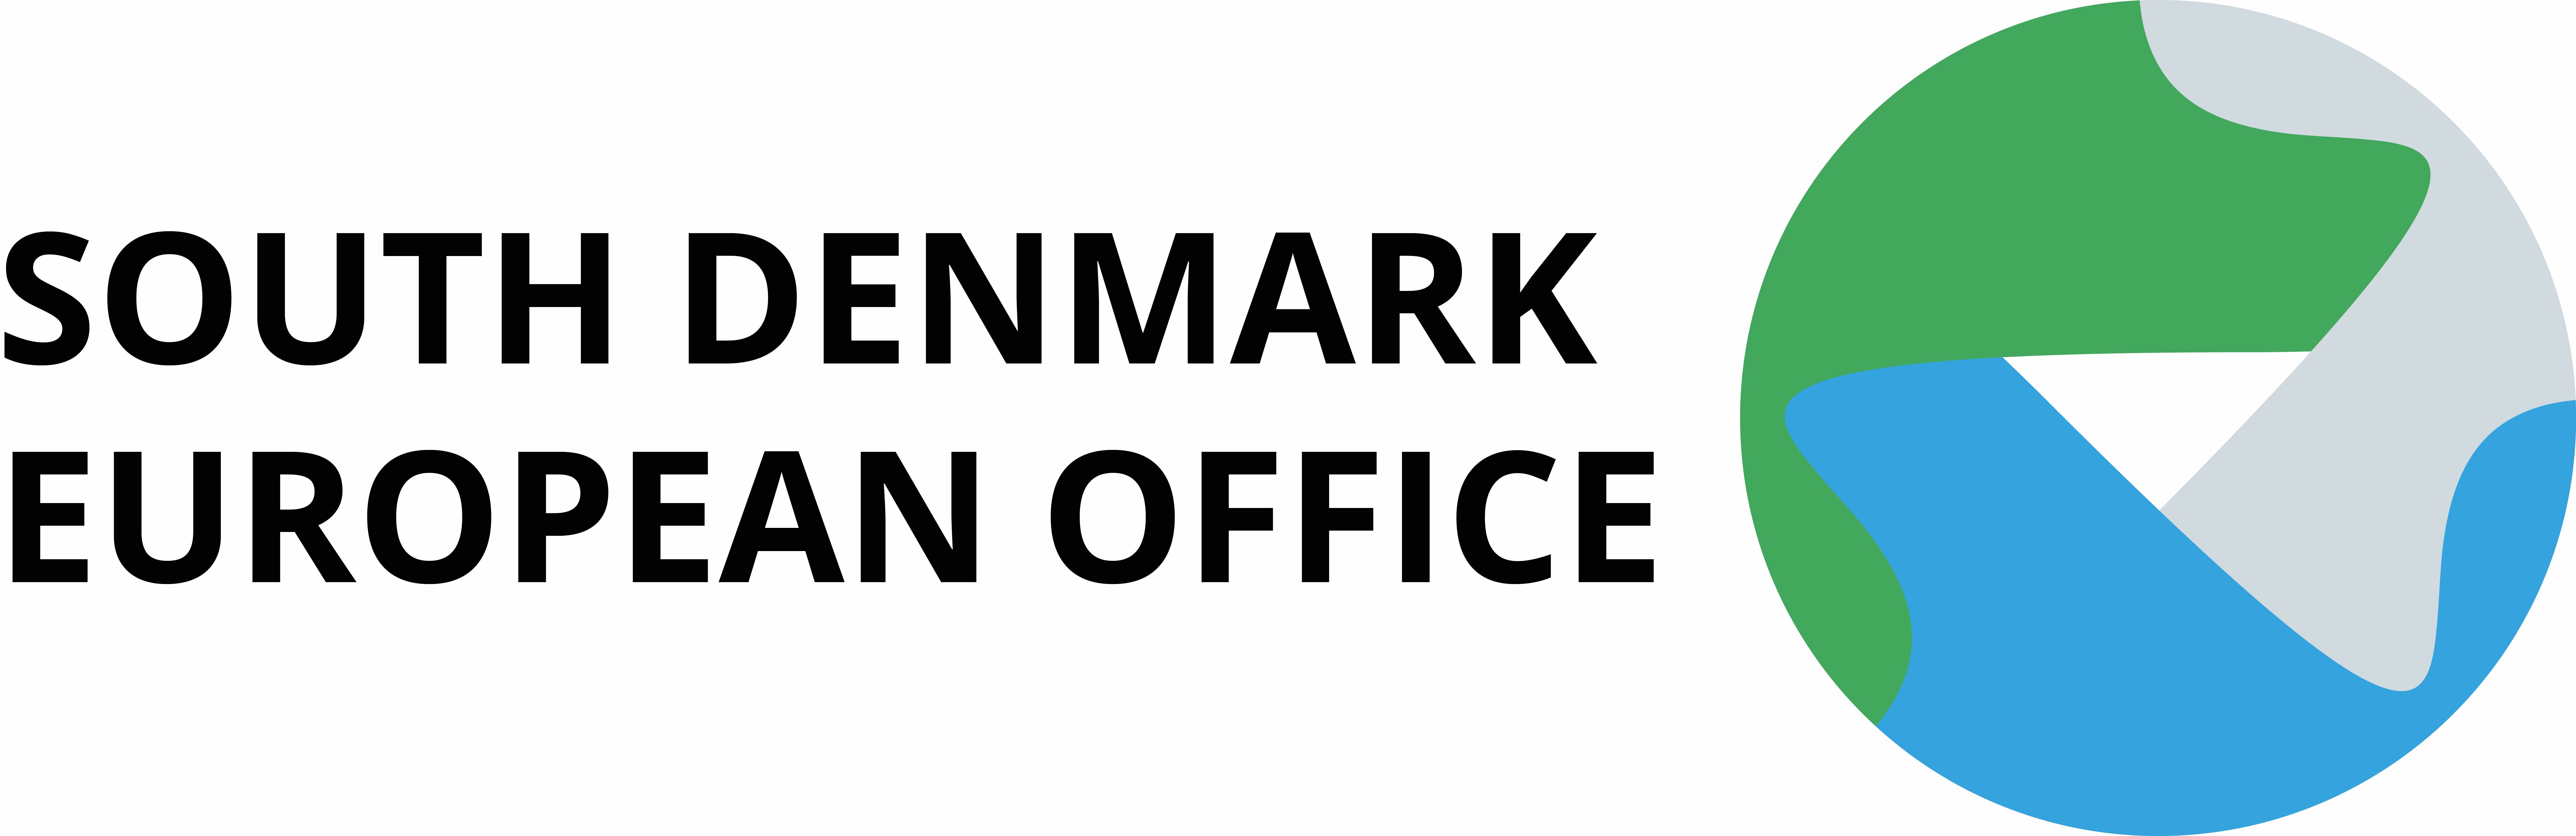 South Denmark European Office